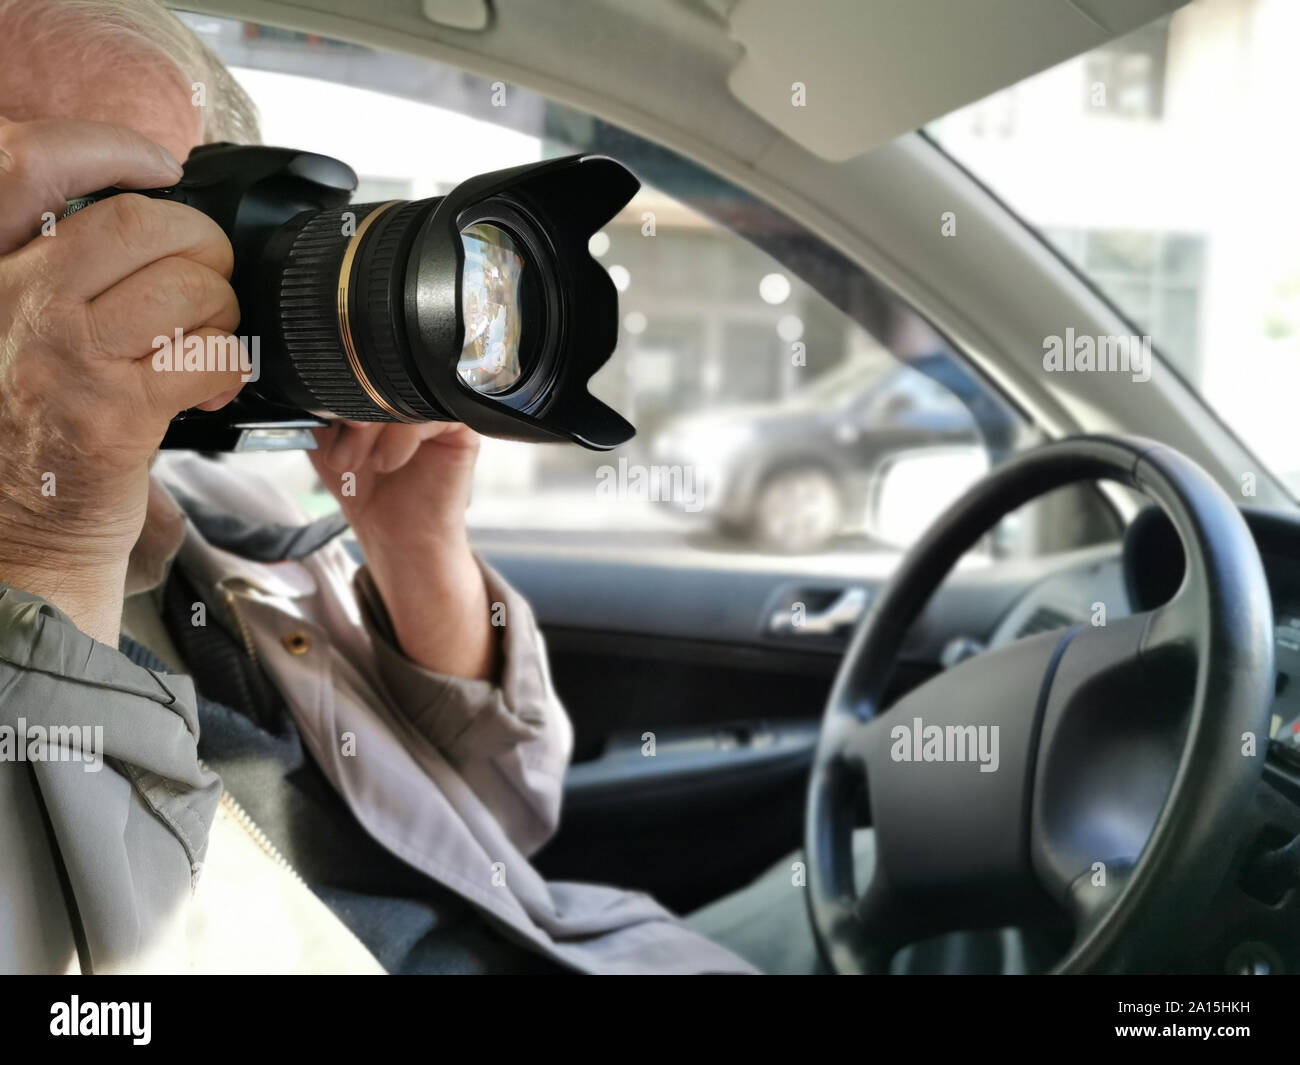 Private investigator with digital camera making photographs in car closeup Stock Photo